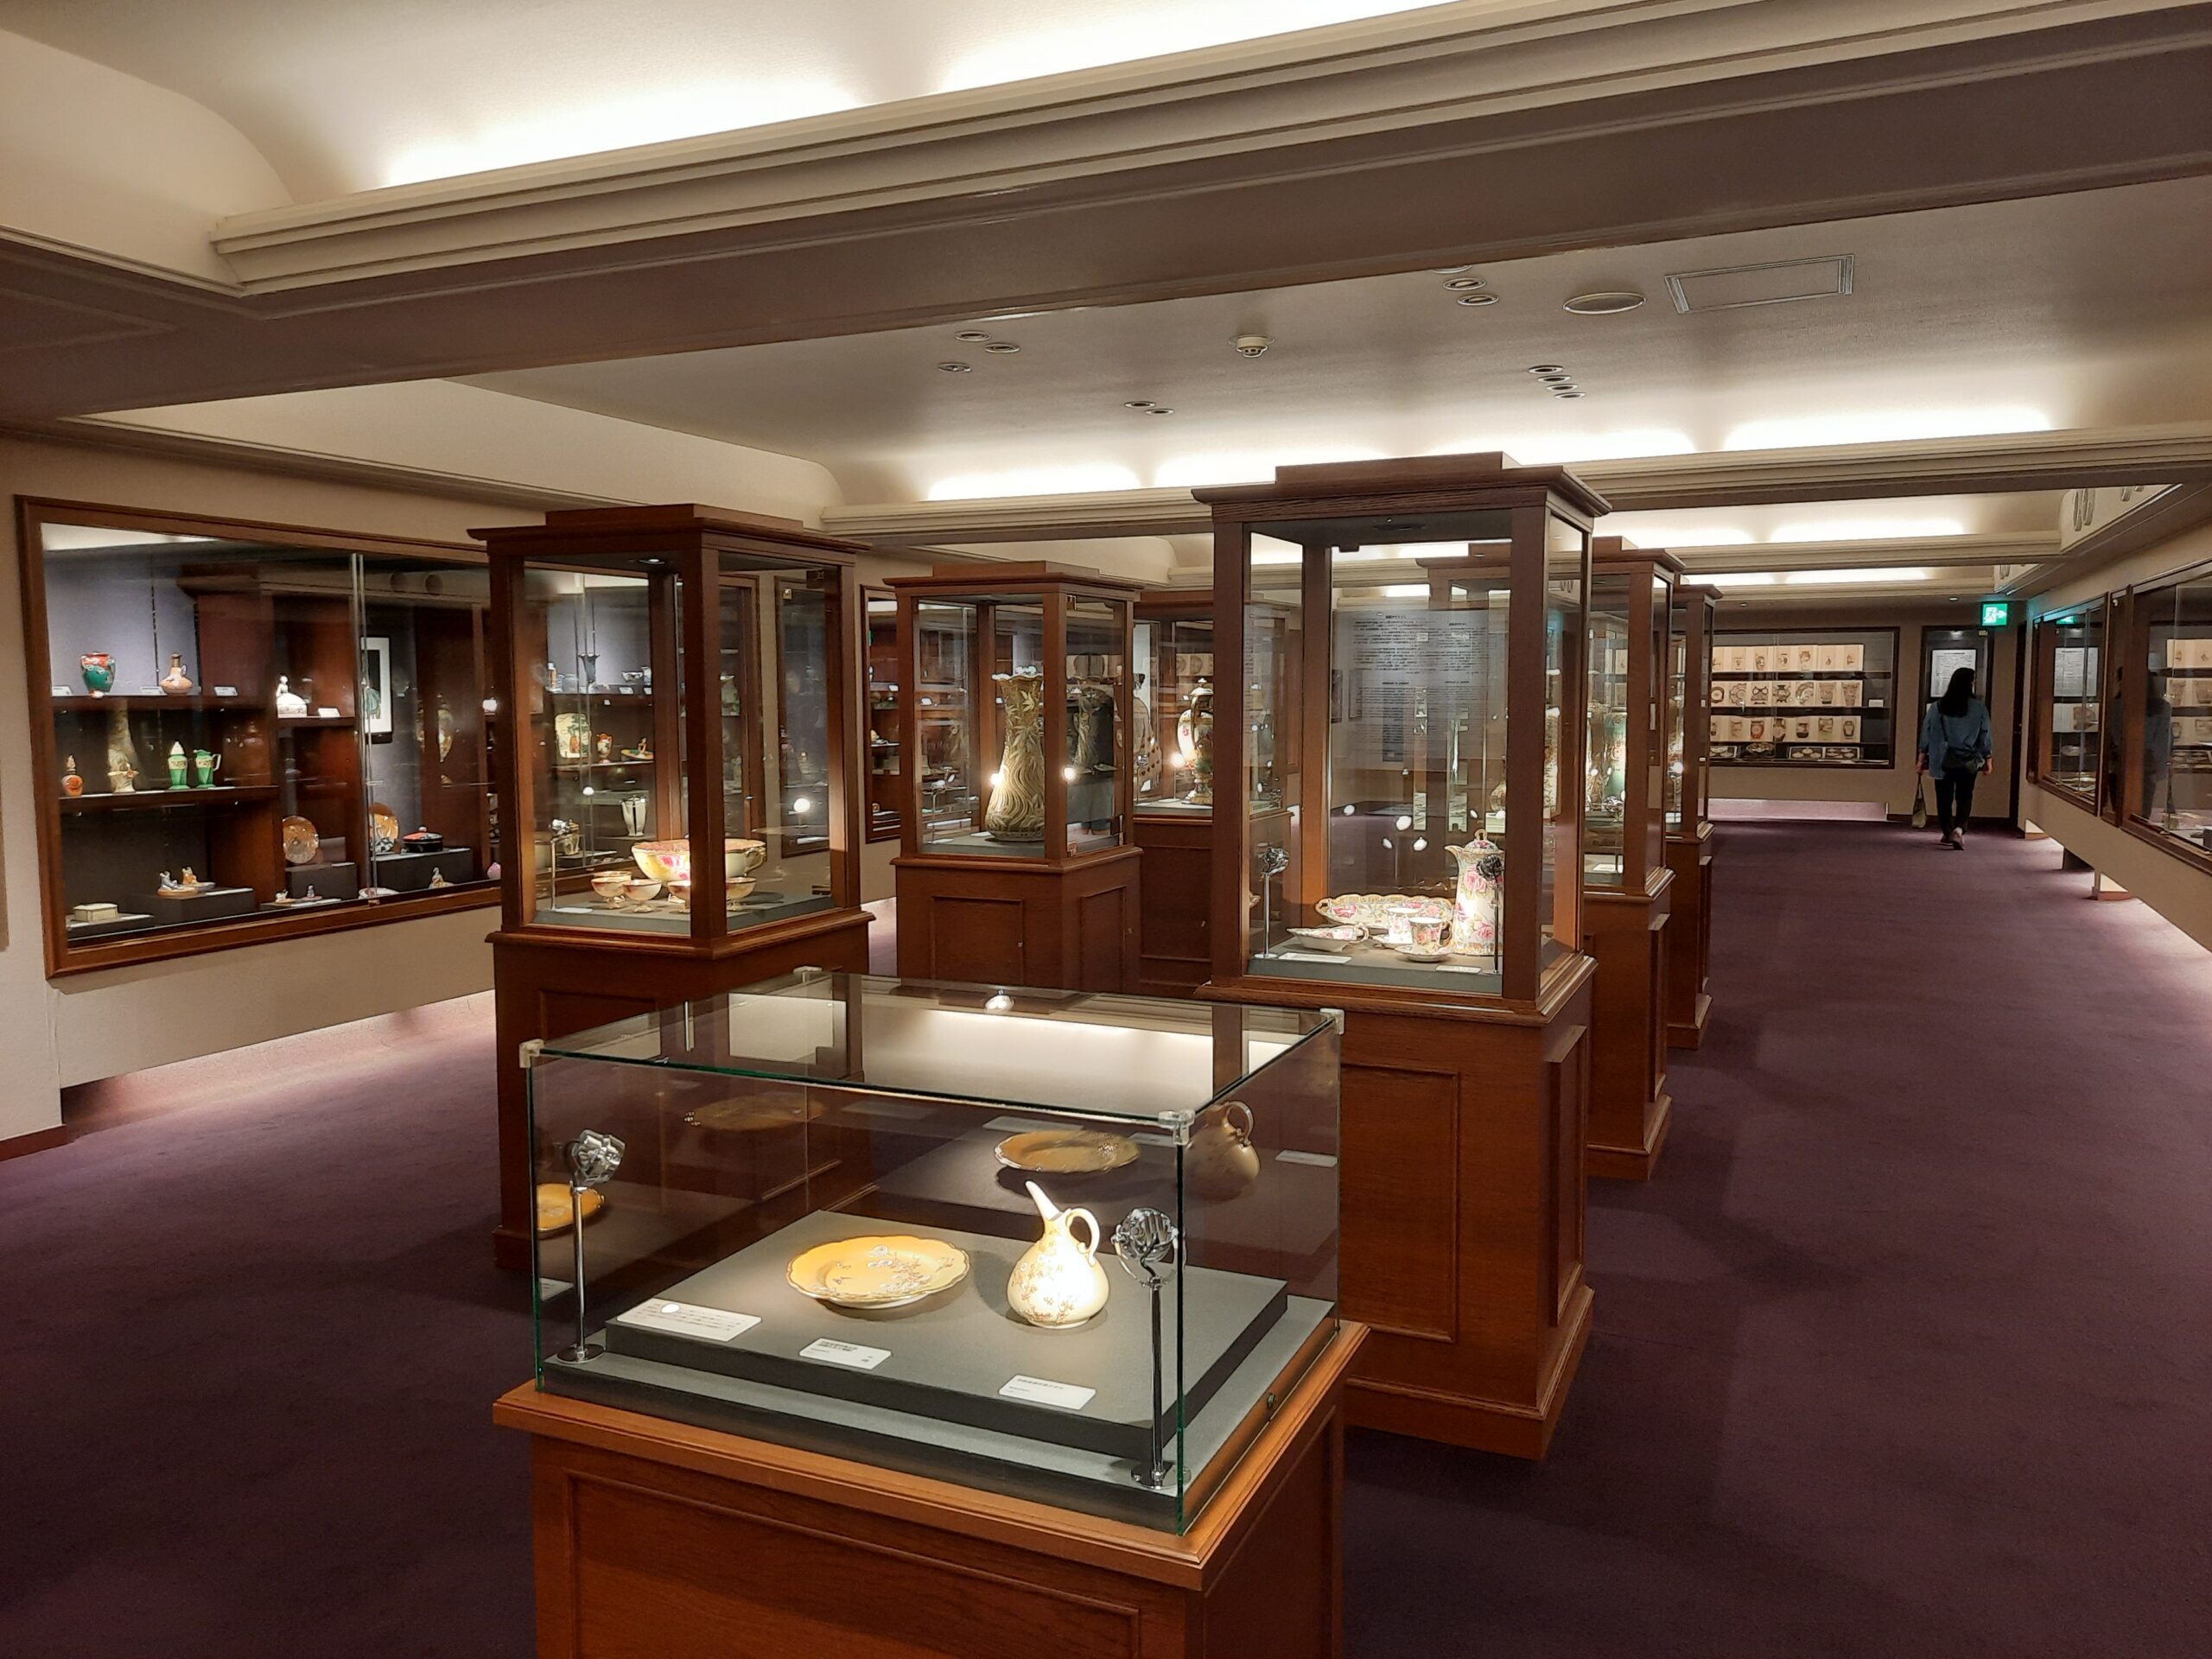 museum, glass, tablewares, carpet, lights